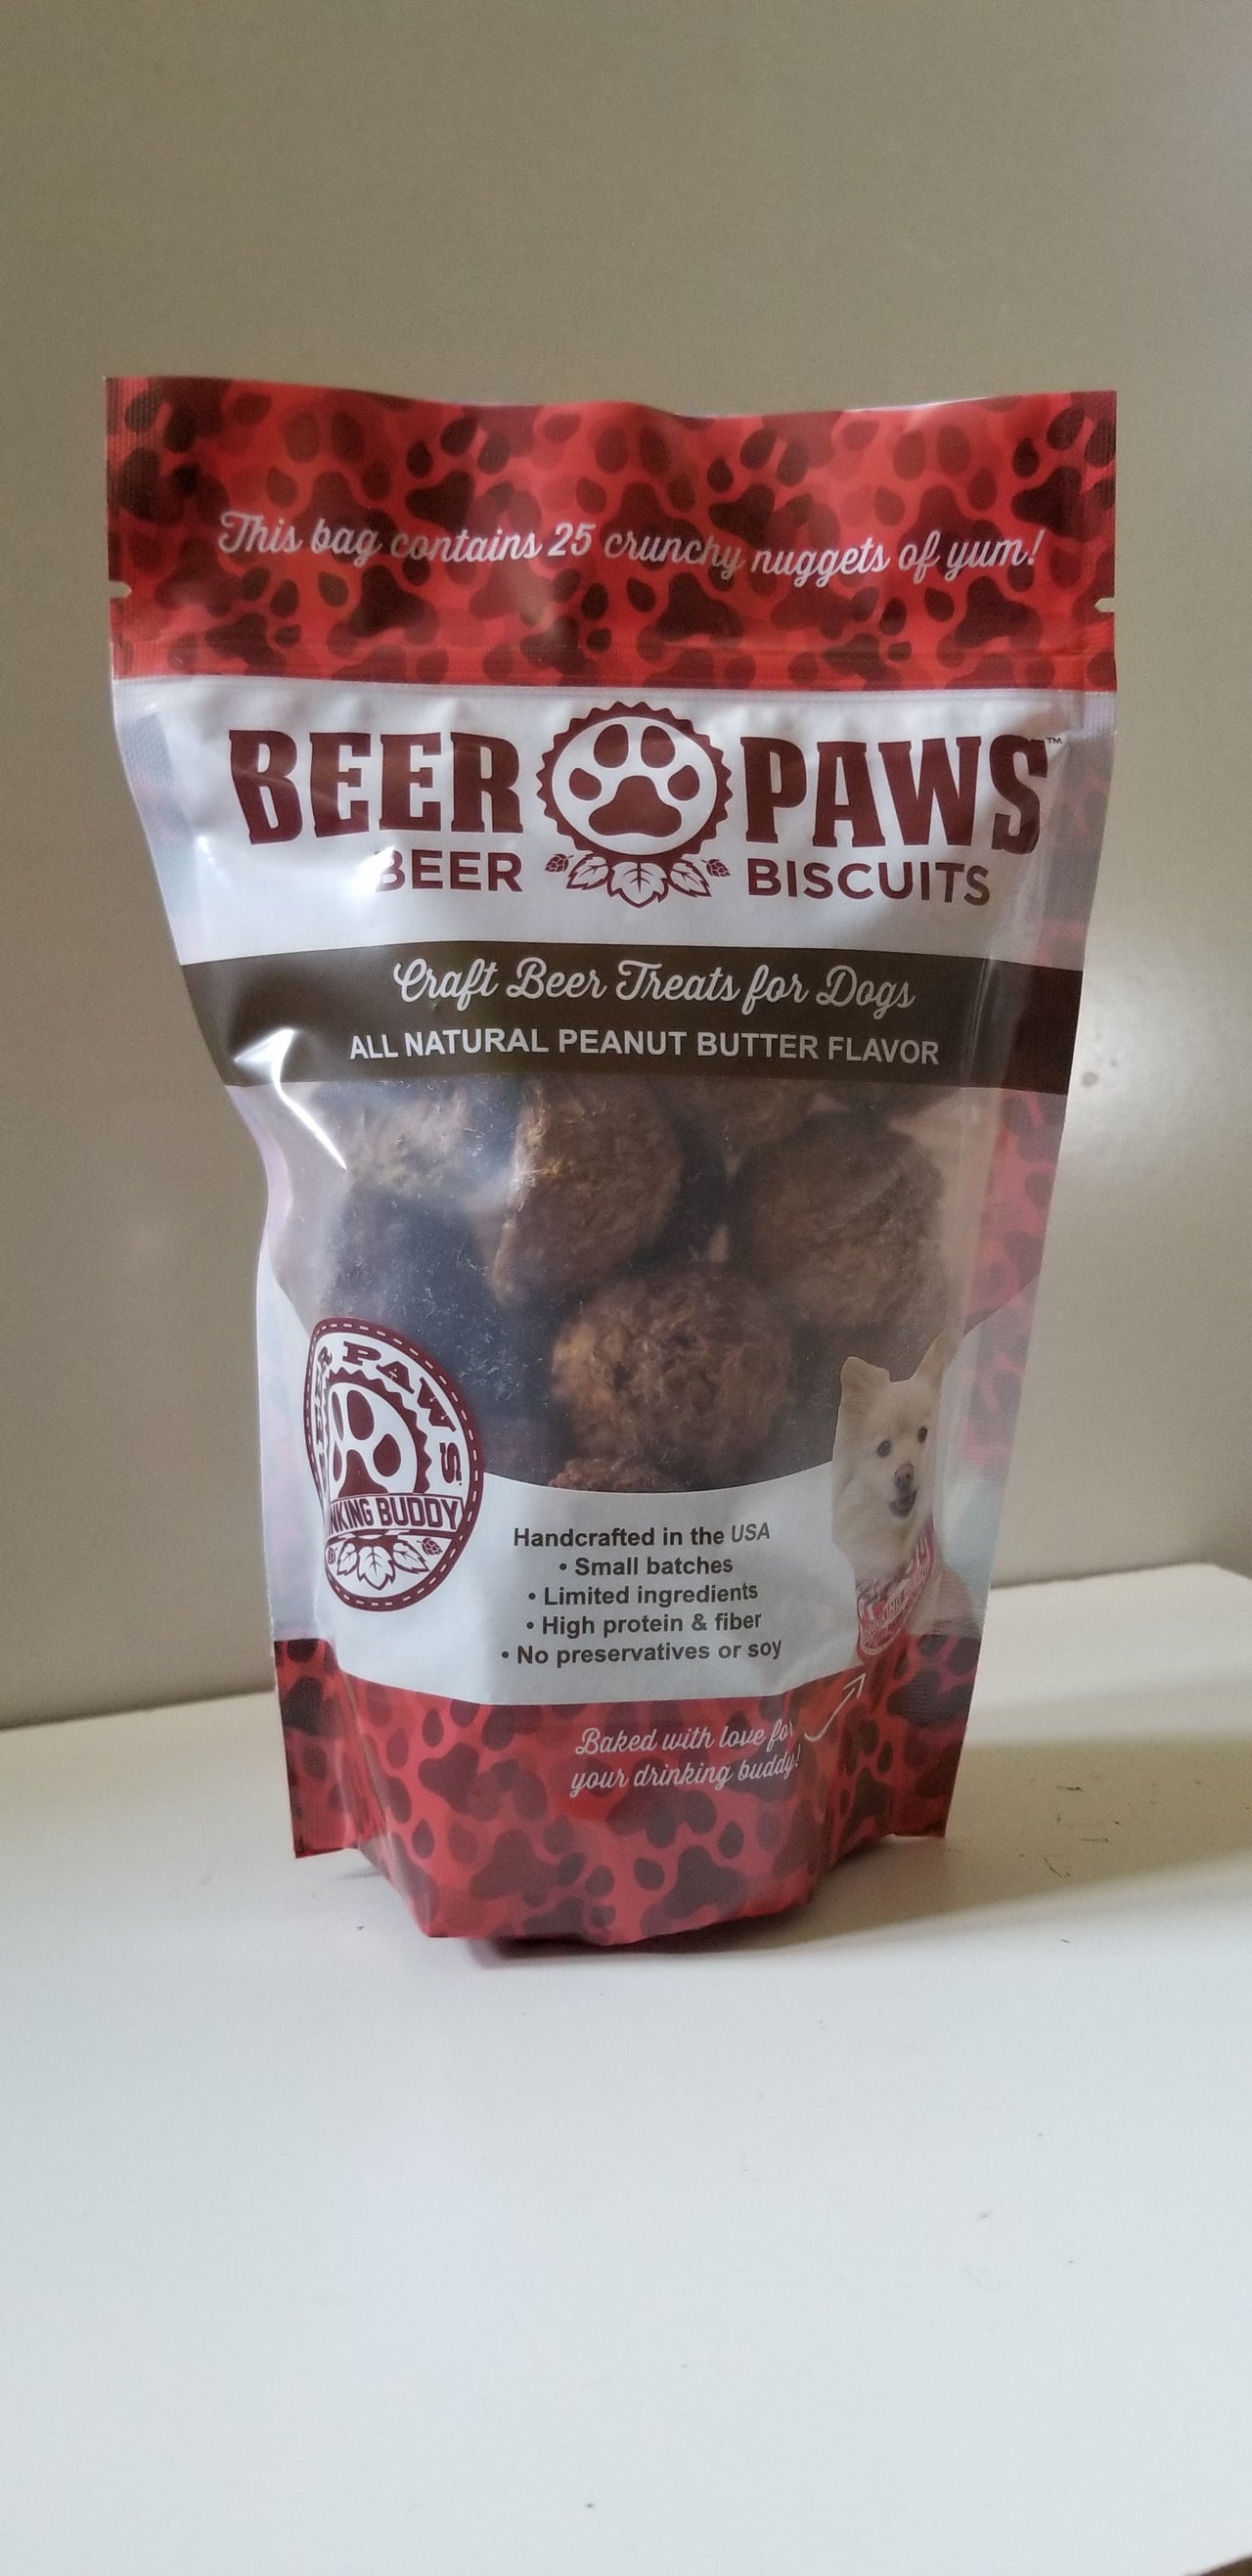 Original Beer Paws Peanut Butter Flavor Beer Biscuits Craft Beer Treats for Dogs